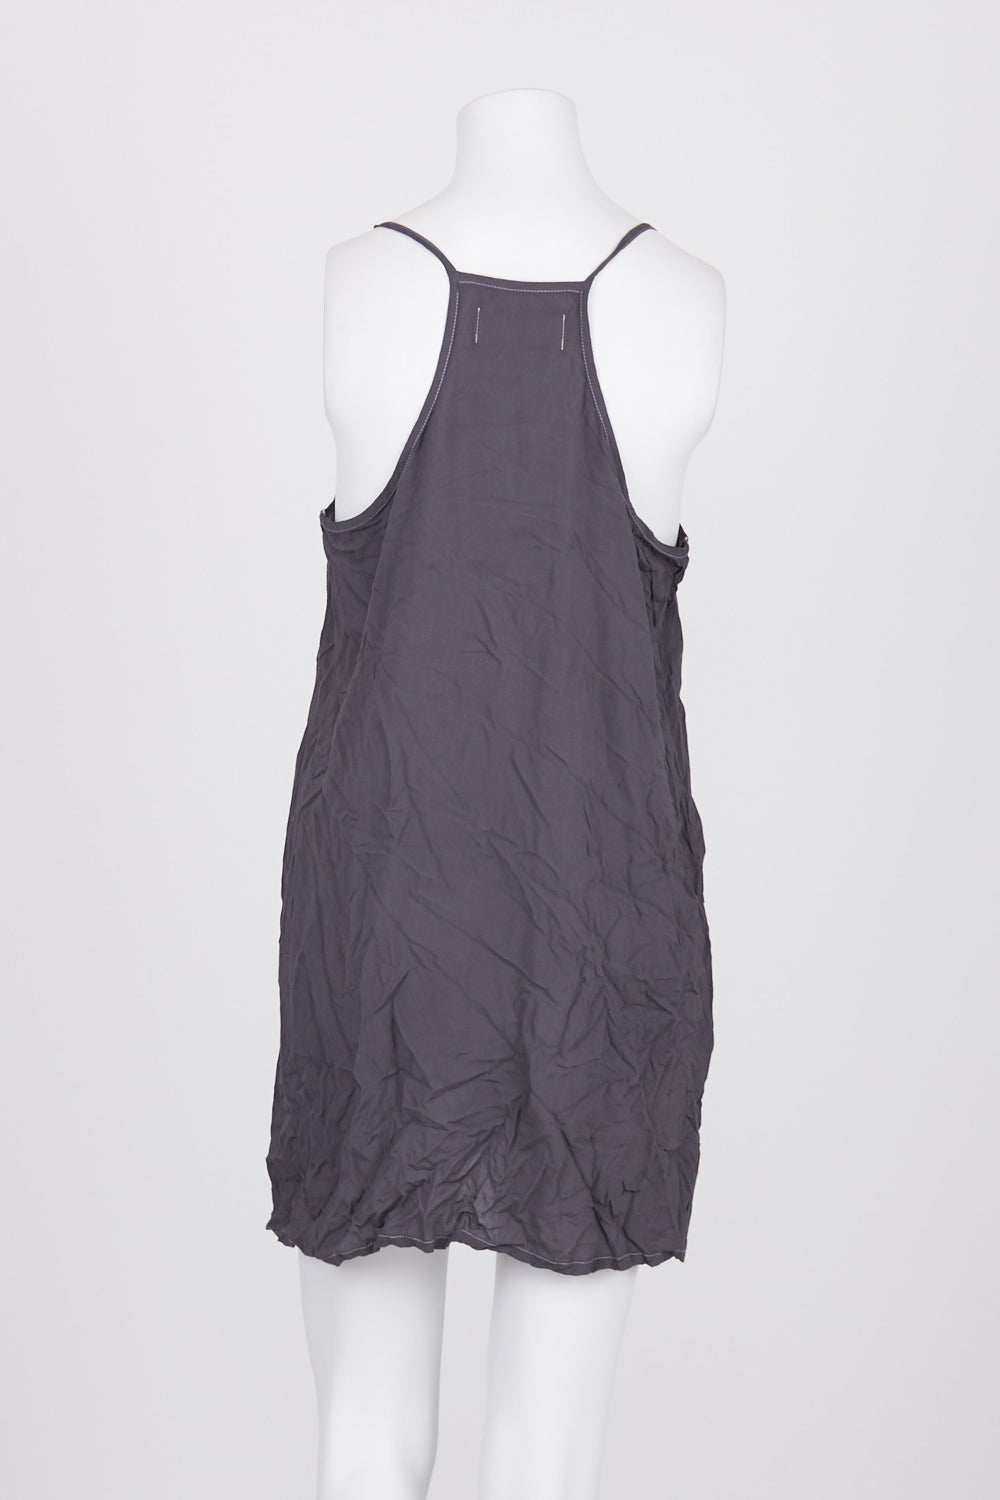 Kuwaii Grey Sleeveless Slip Dress 12